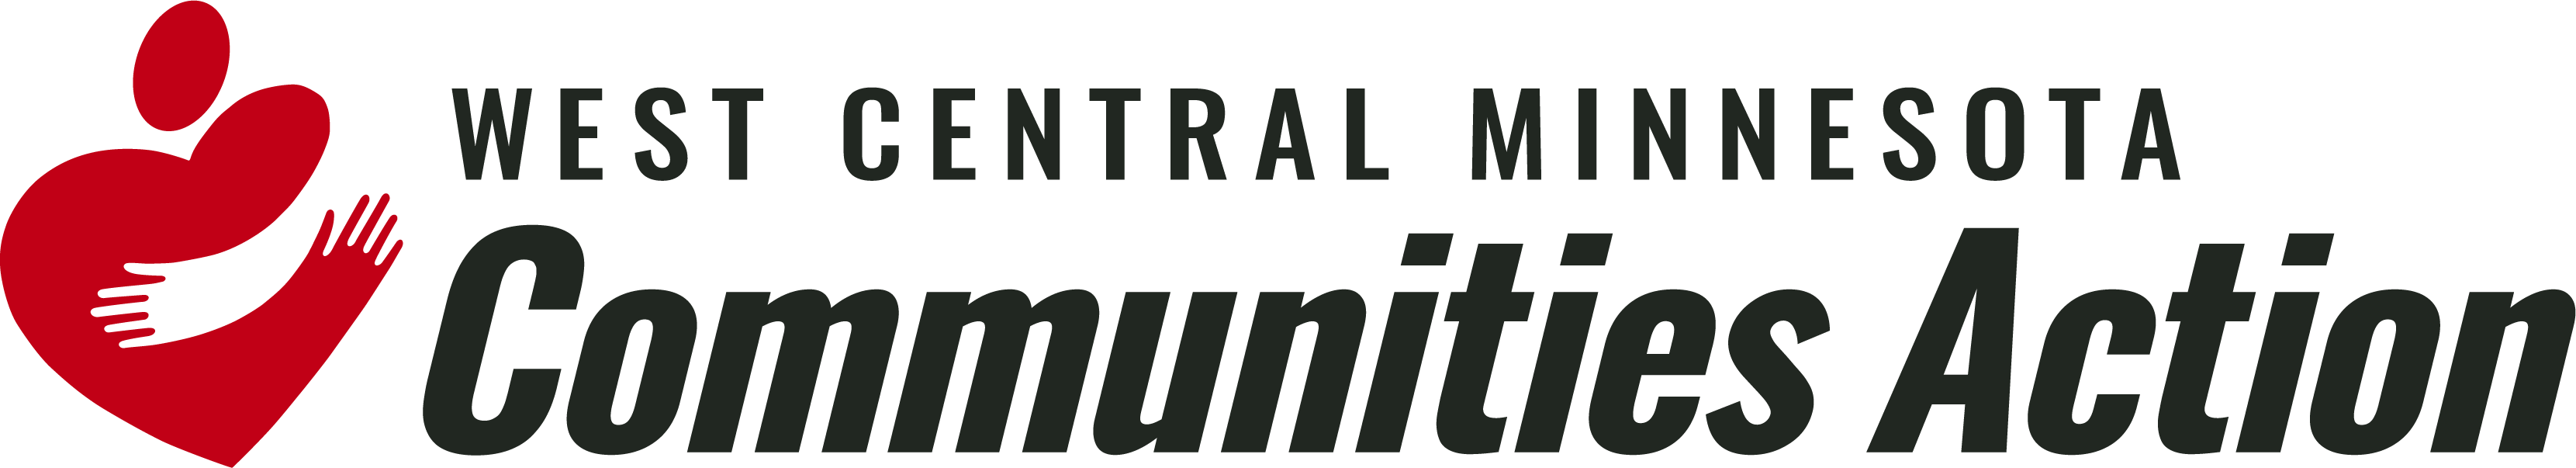 West Central Minnesota Communities Action logo